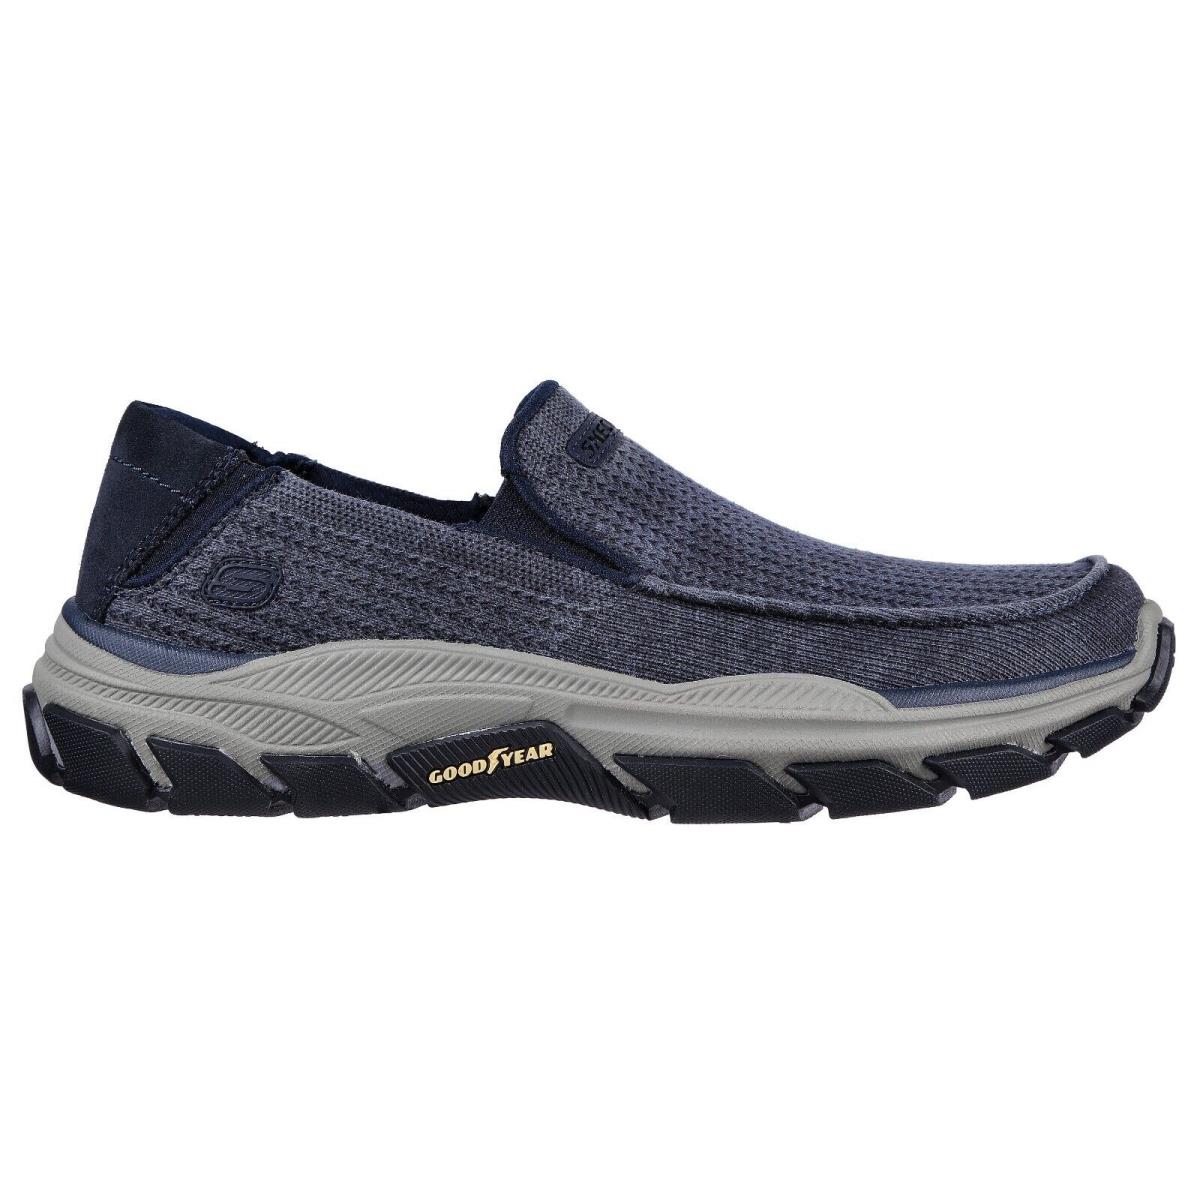 Skechers shoes Respected Vernon - Navy 8